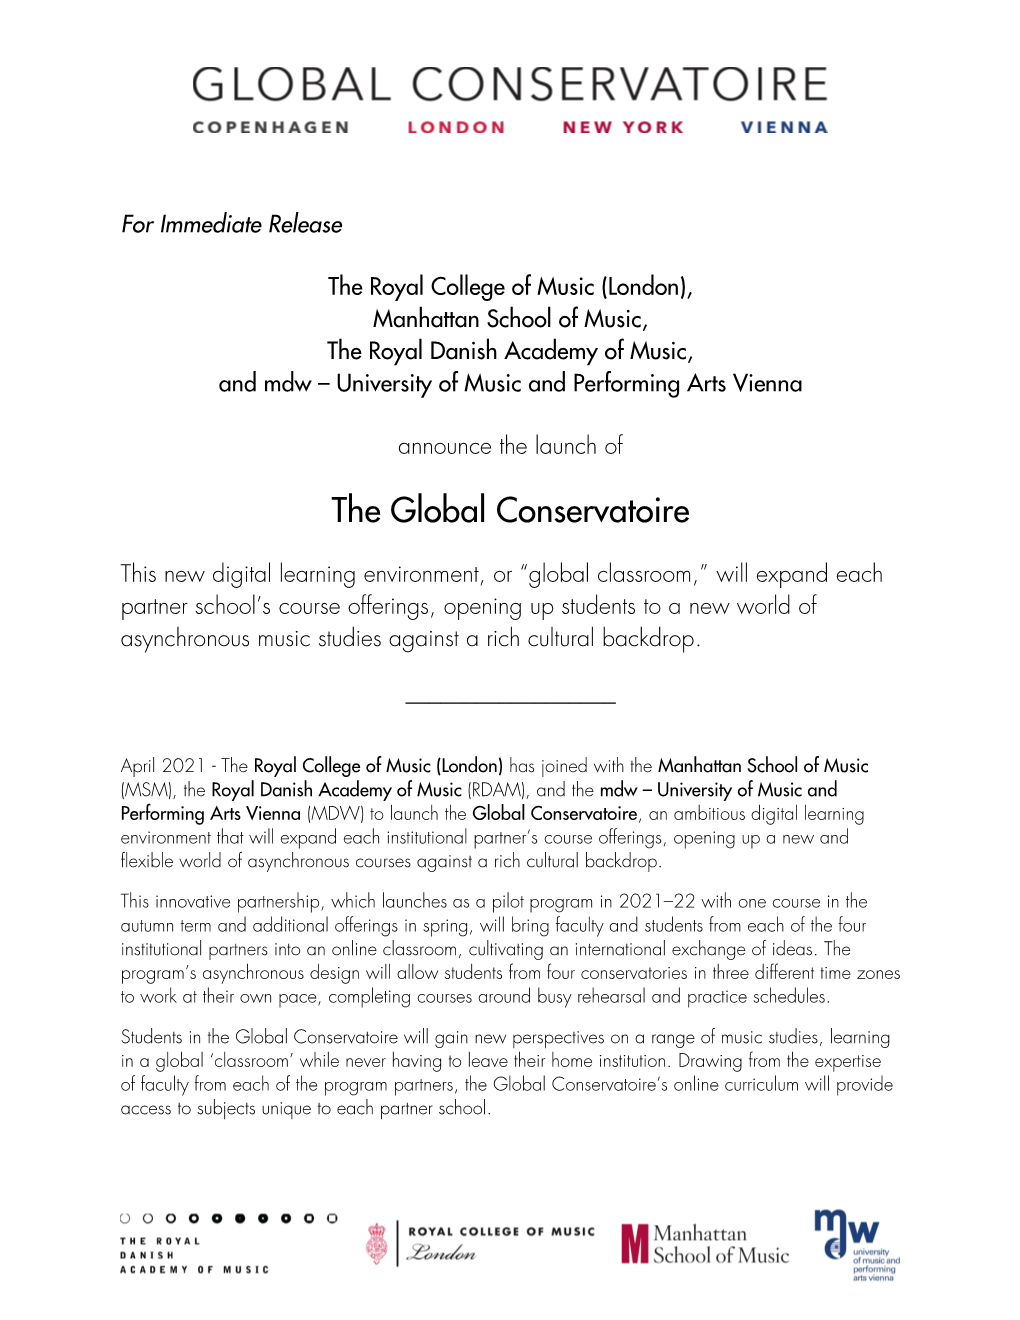 Announcing Global Conservatoire Partnership